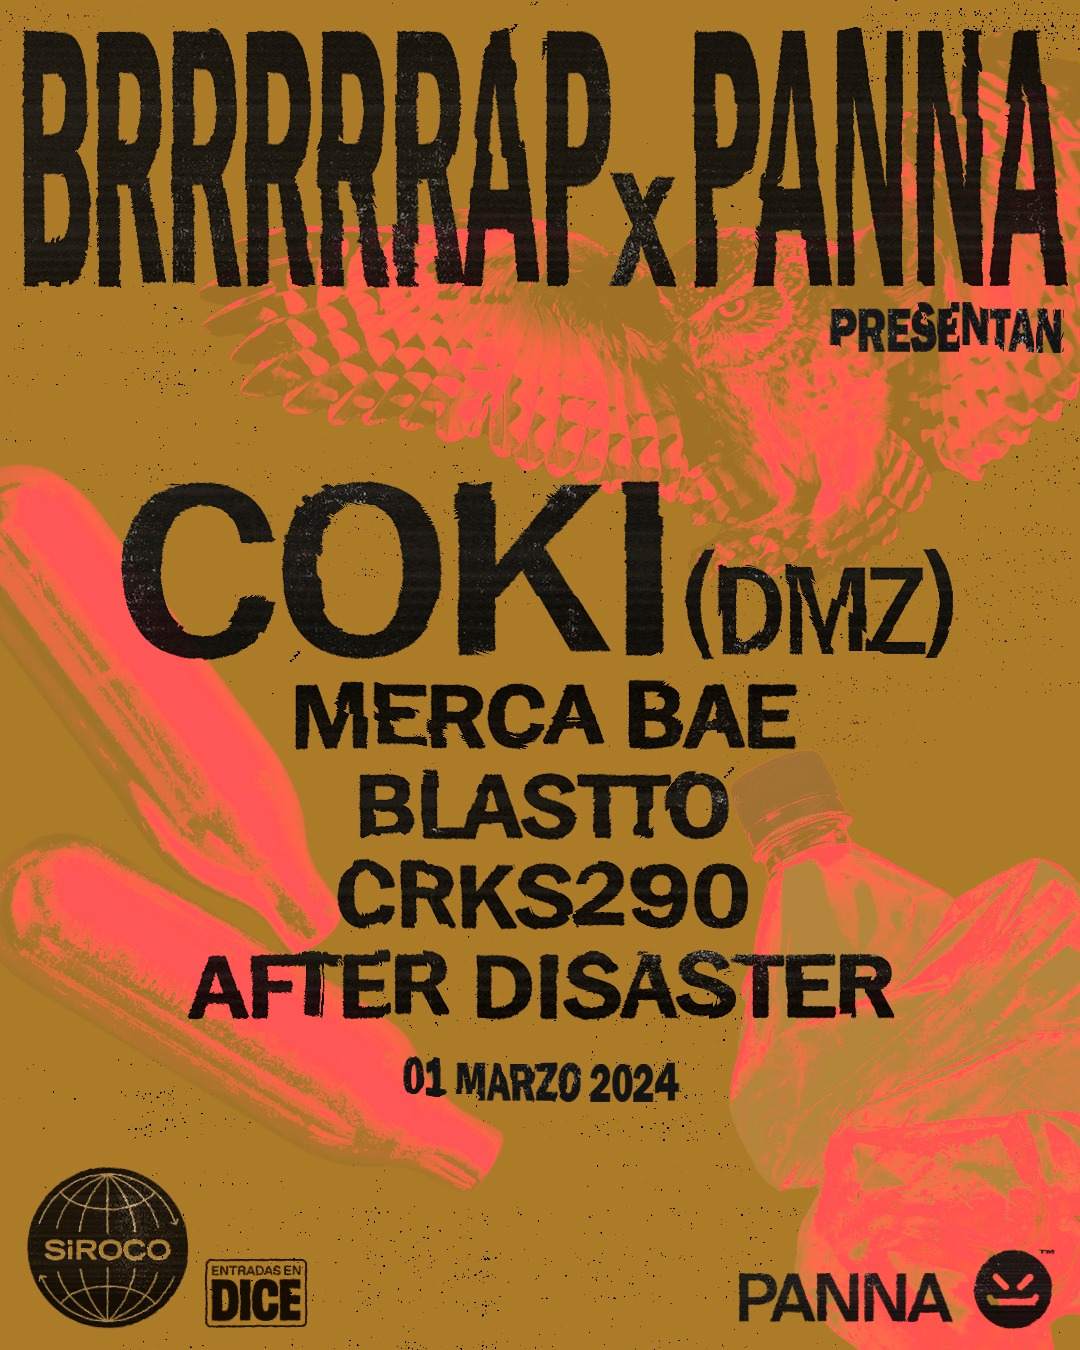 BRRRRRAP with PANNA presenta: Coki (Dmz) - Página trasera